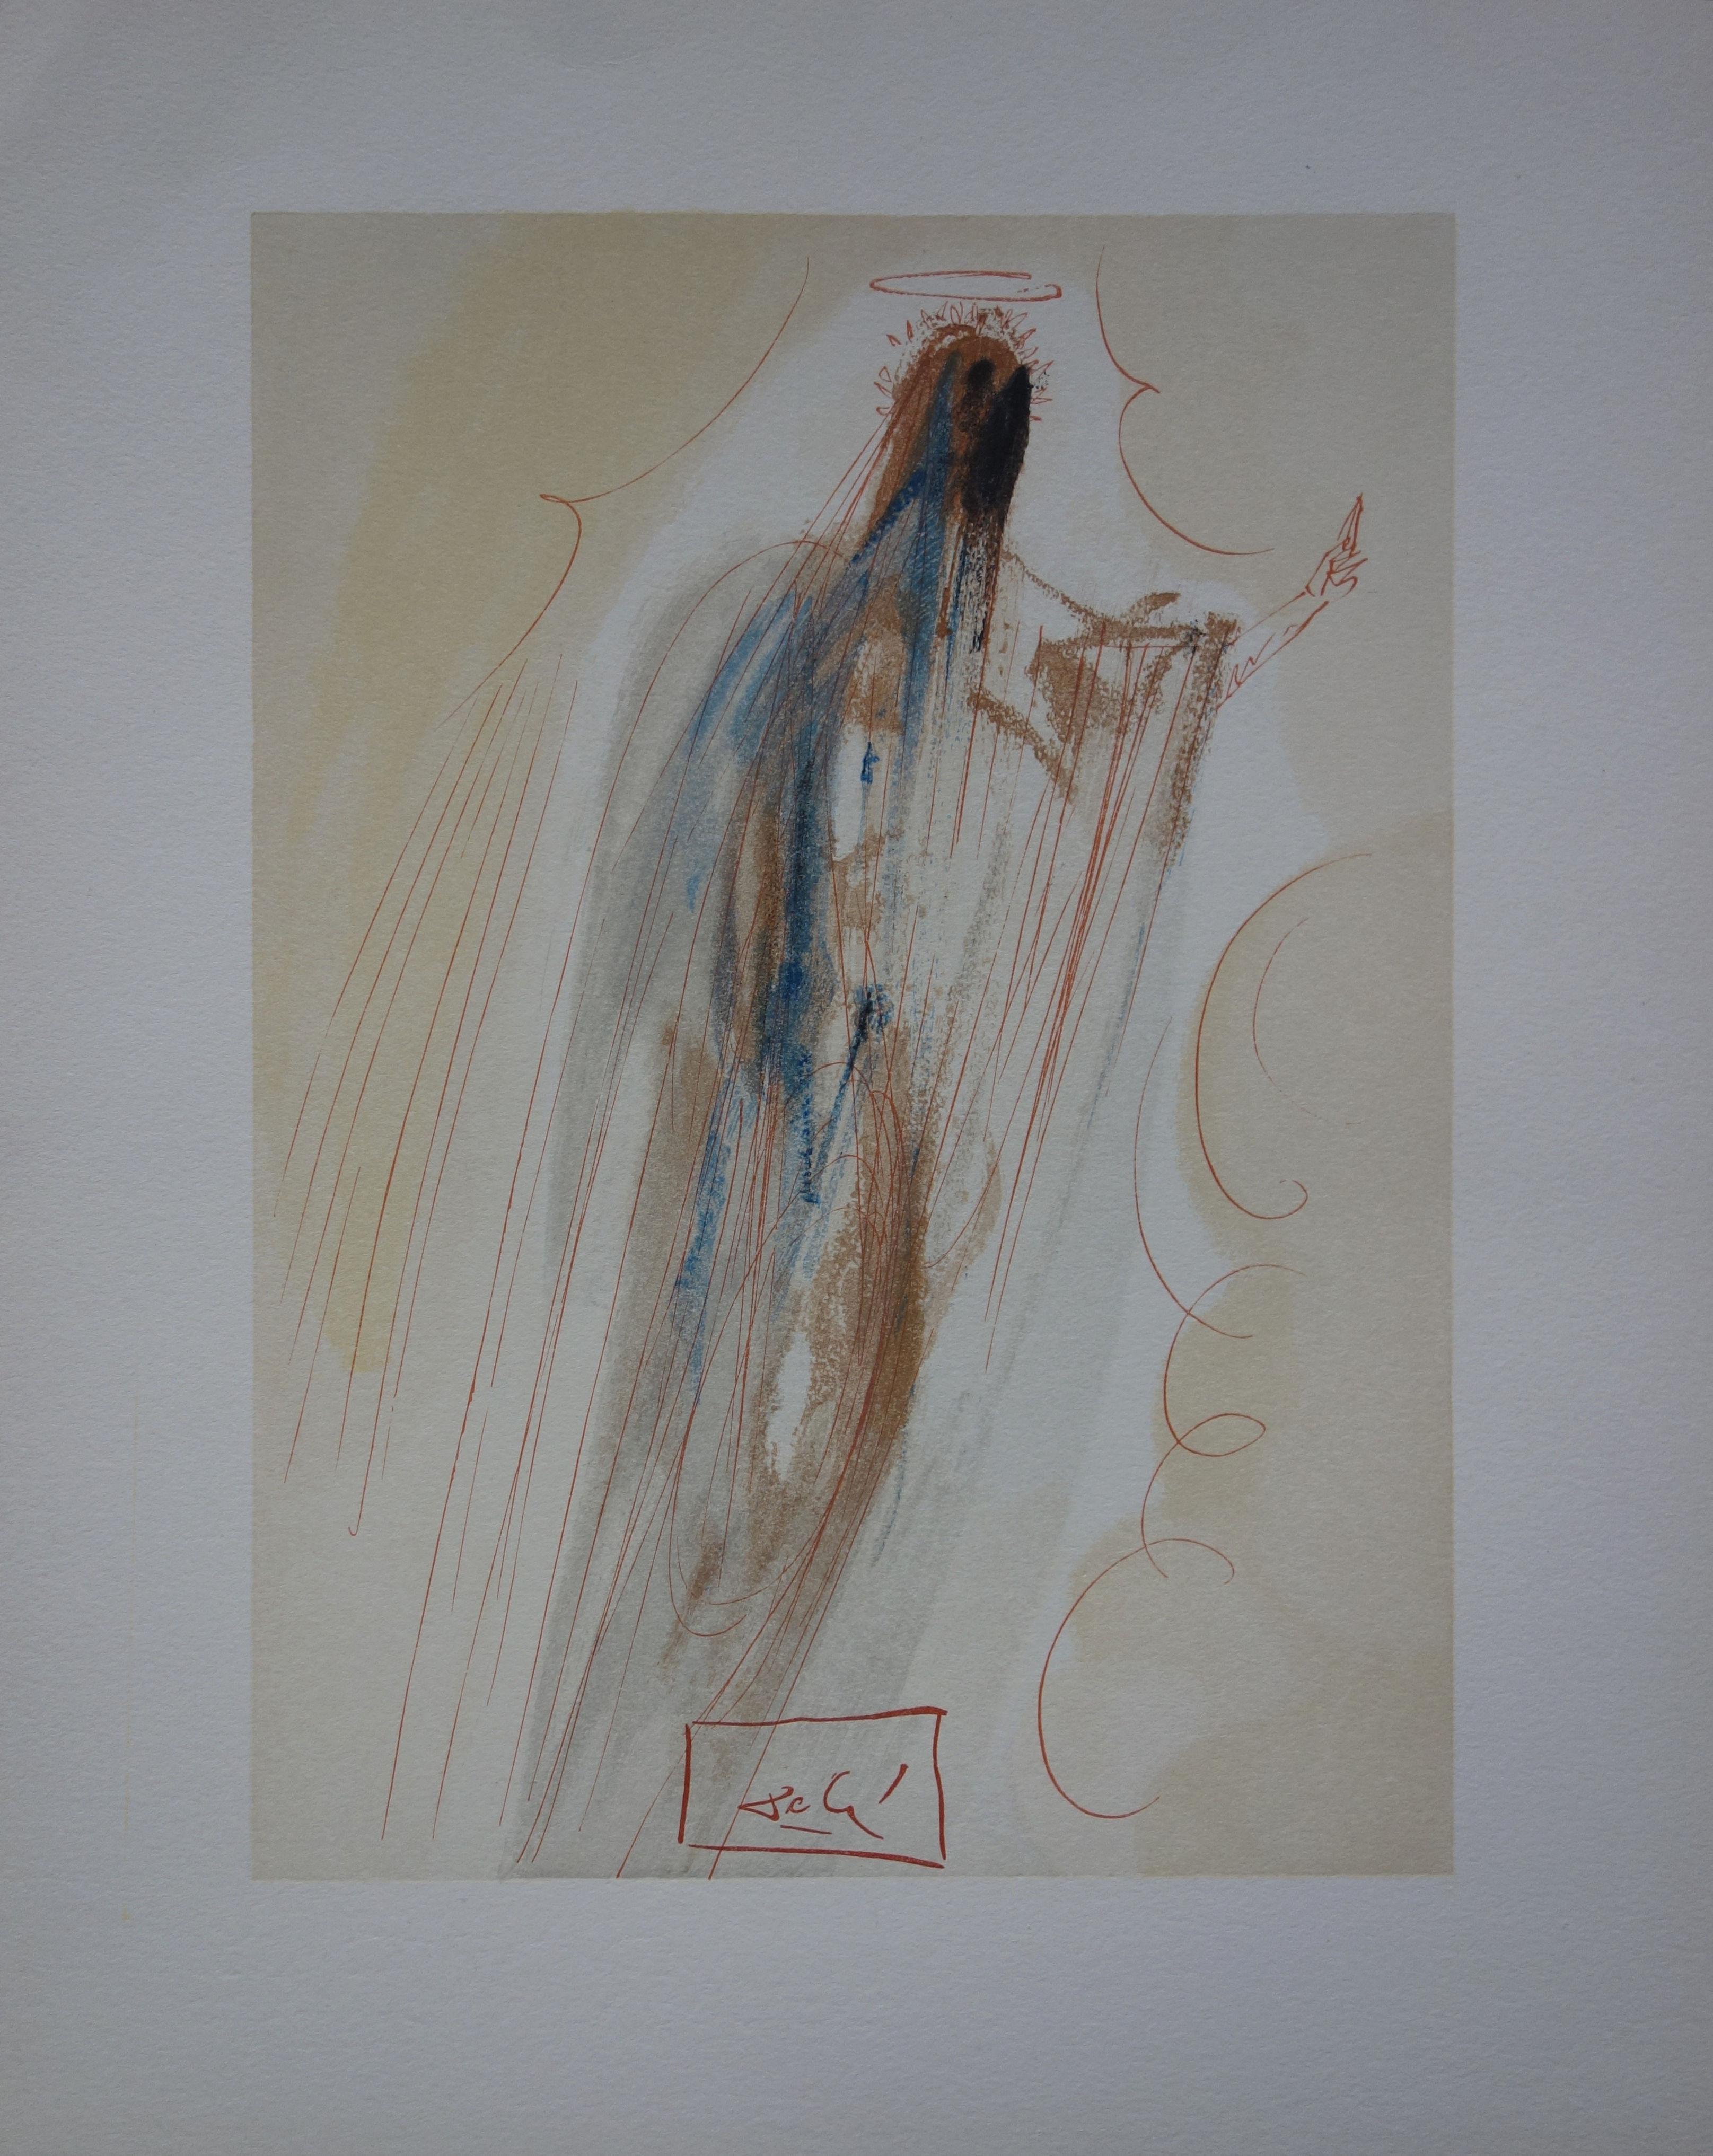 Salvador Dalí Figurative Print - Heaven 29 - The Creation of Angels - Woodcut print - 1963 (Field p. 189)